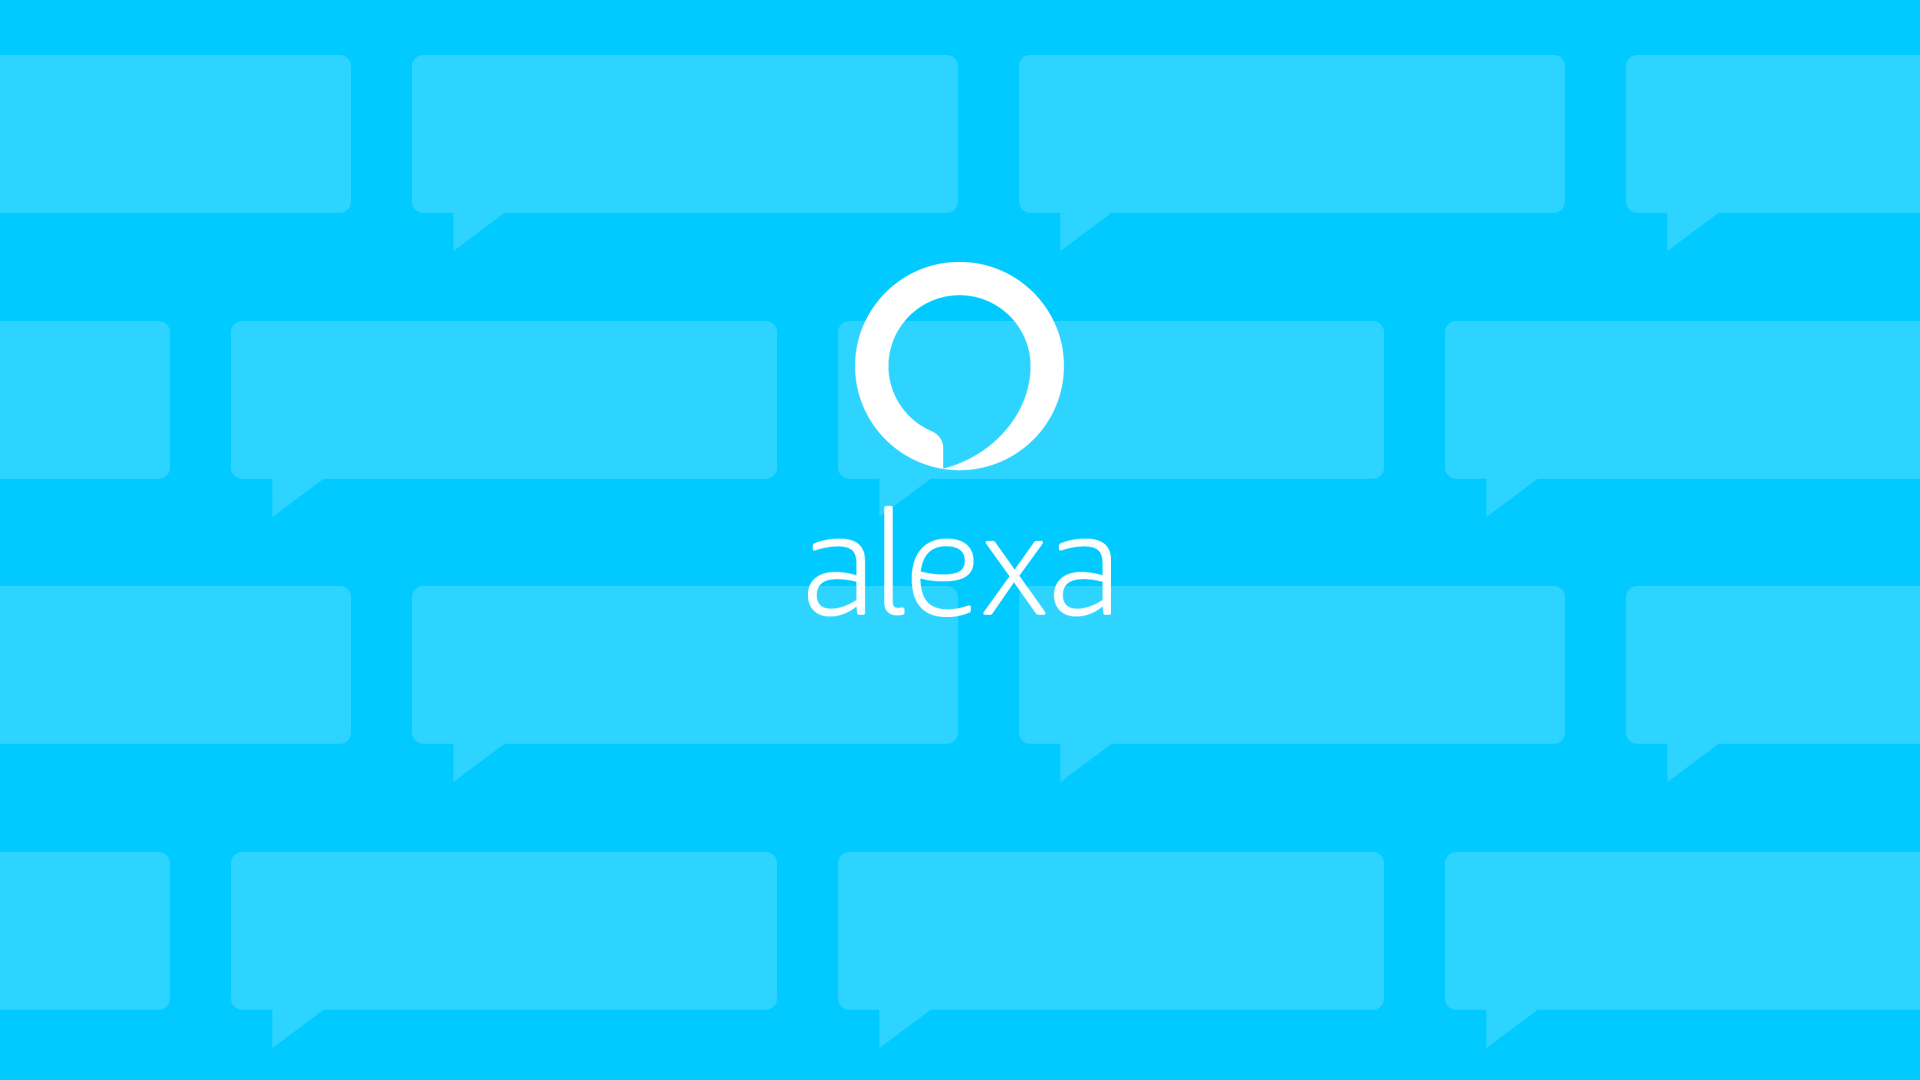 alexa app for windows 7